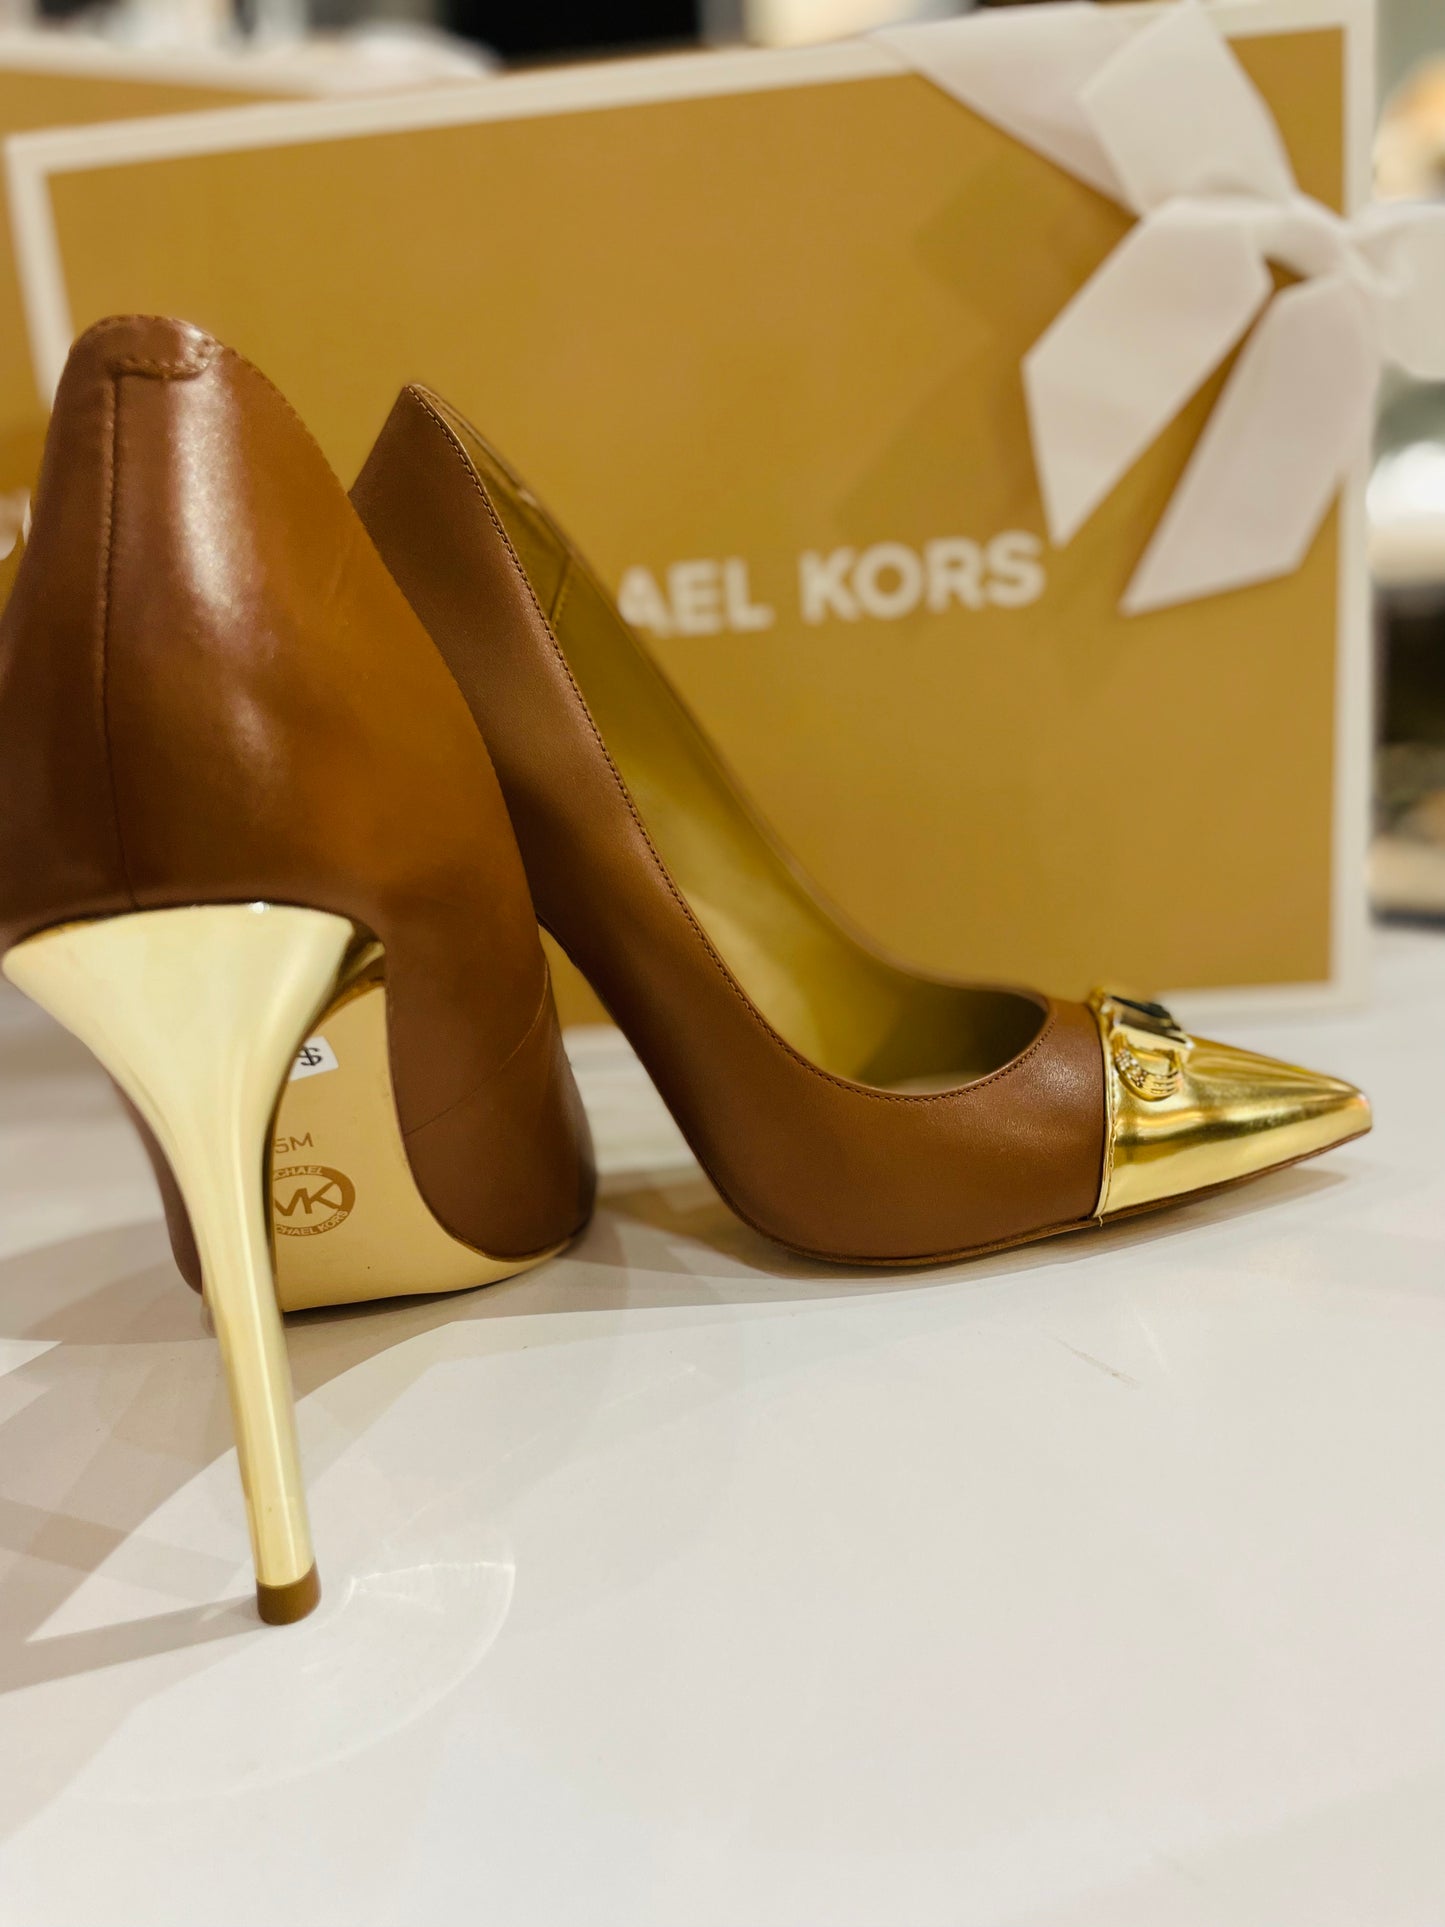 Michael kors heels shoes